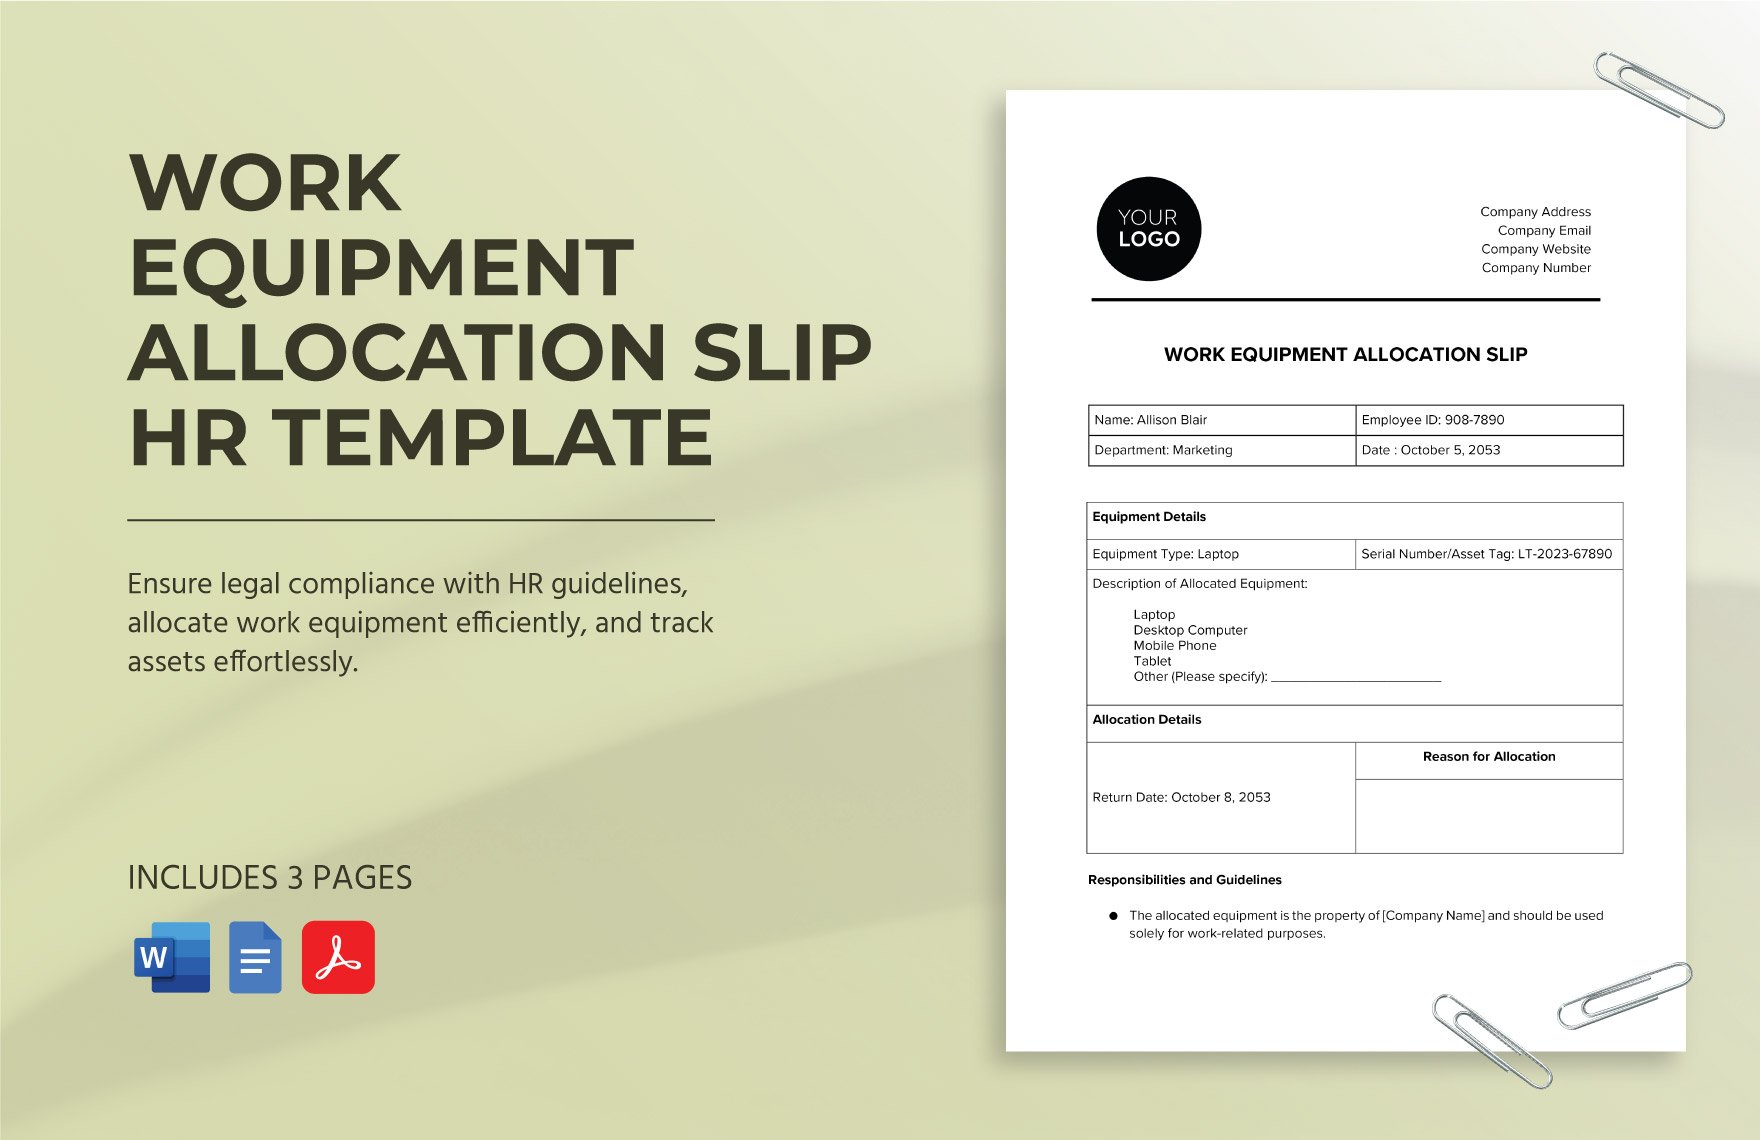 Work Equipment Allocation Slip HR Template